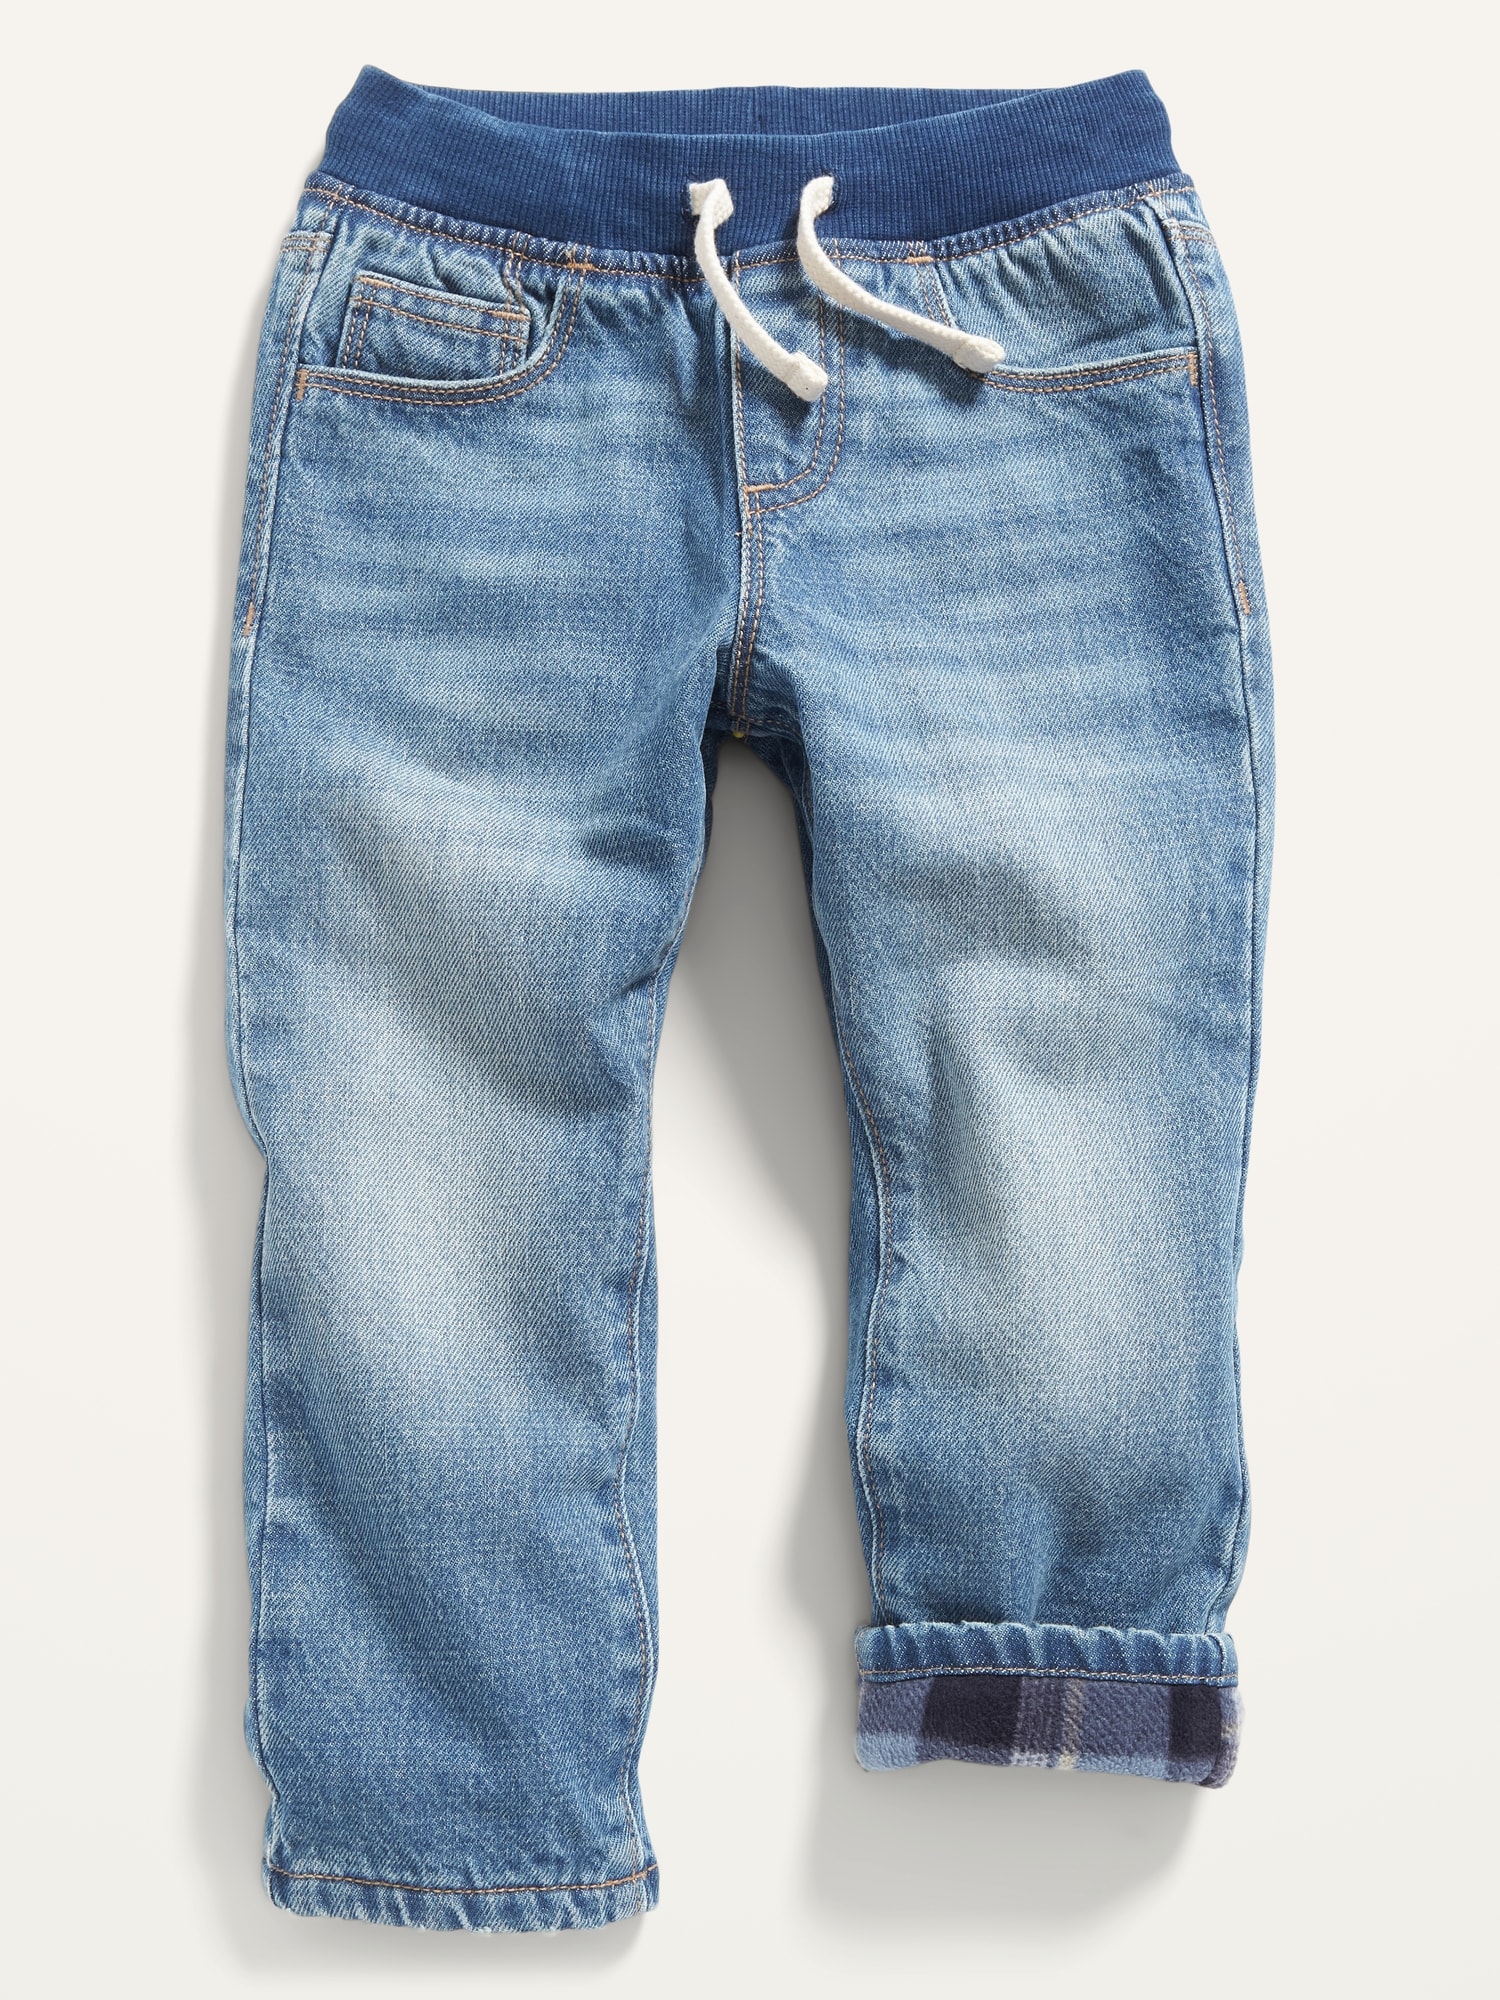 Old Mill Jeans Fleece Lined Denim Pants(Tag 36x30) Hemmed Men's